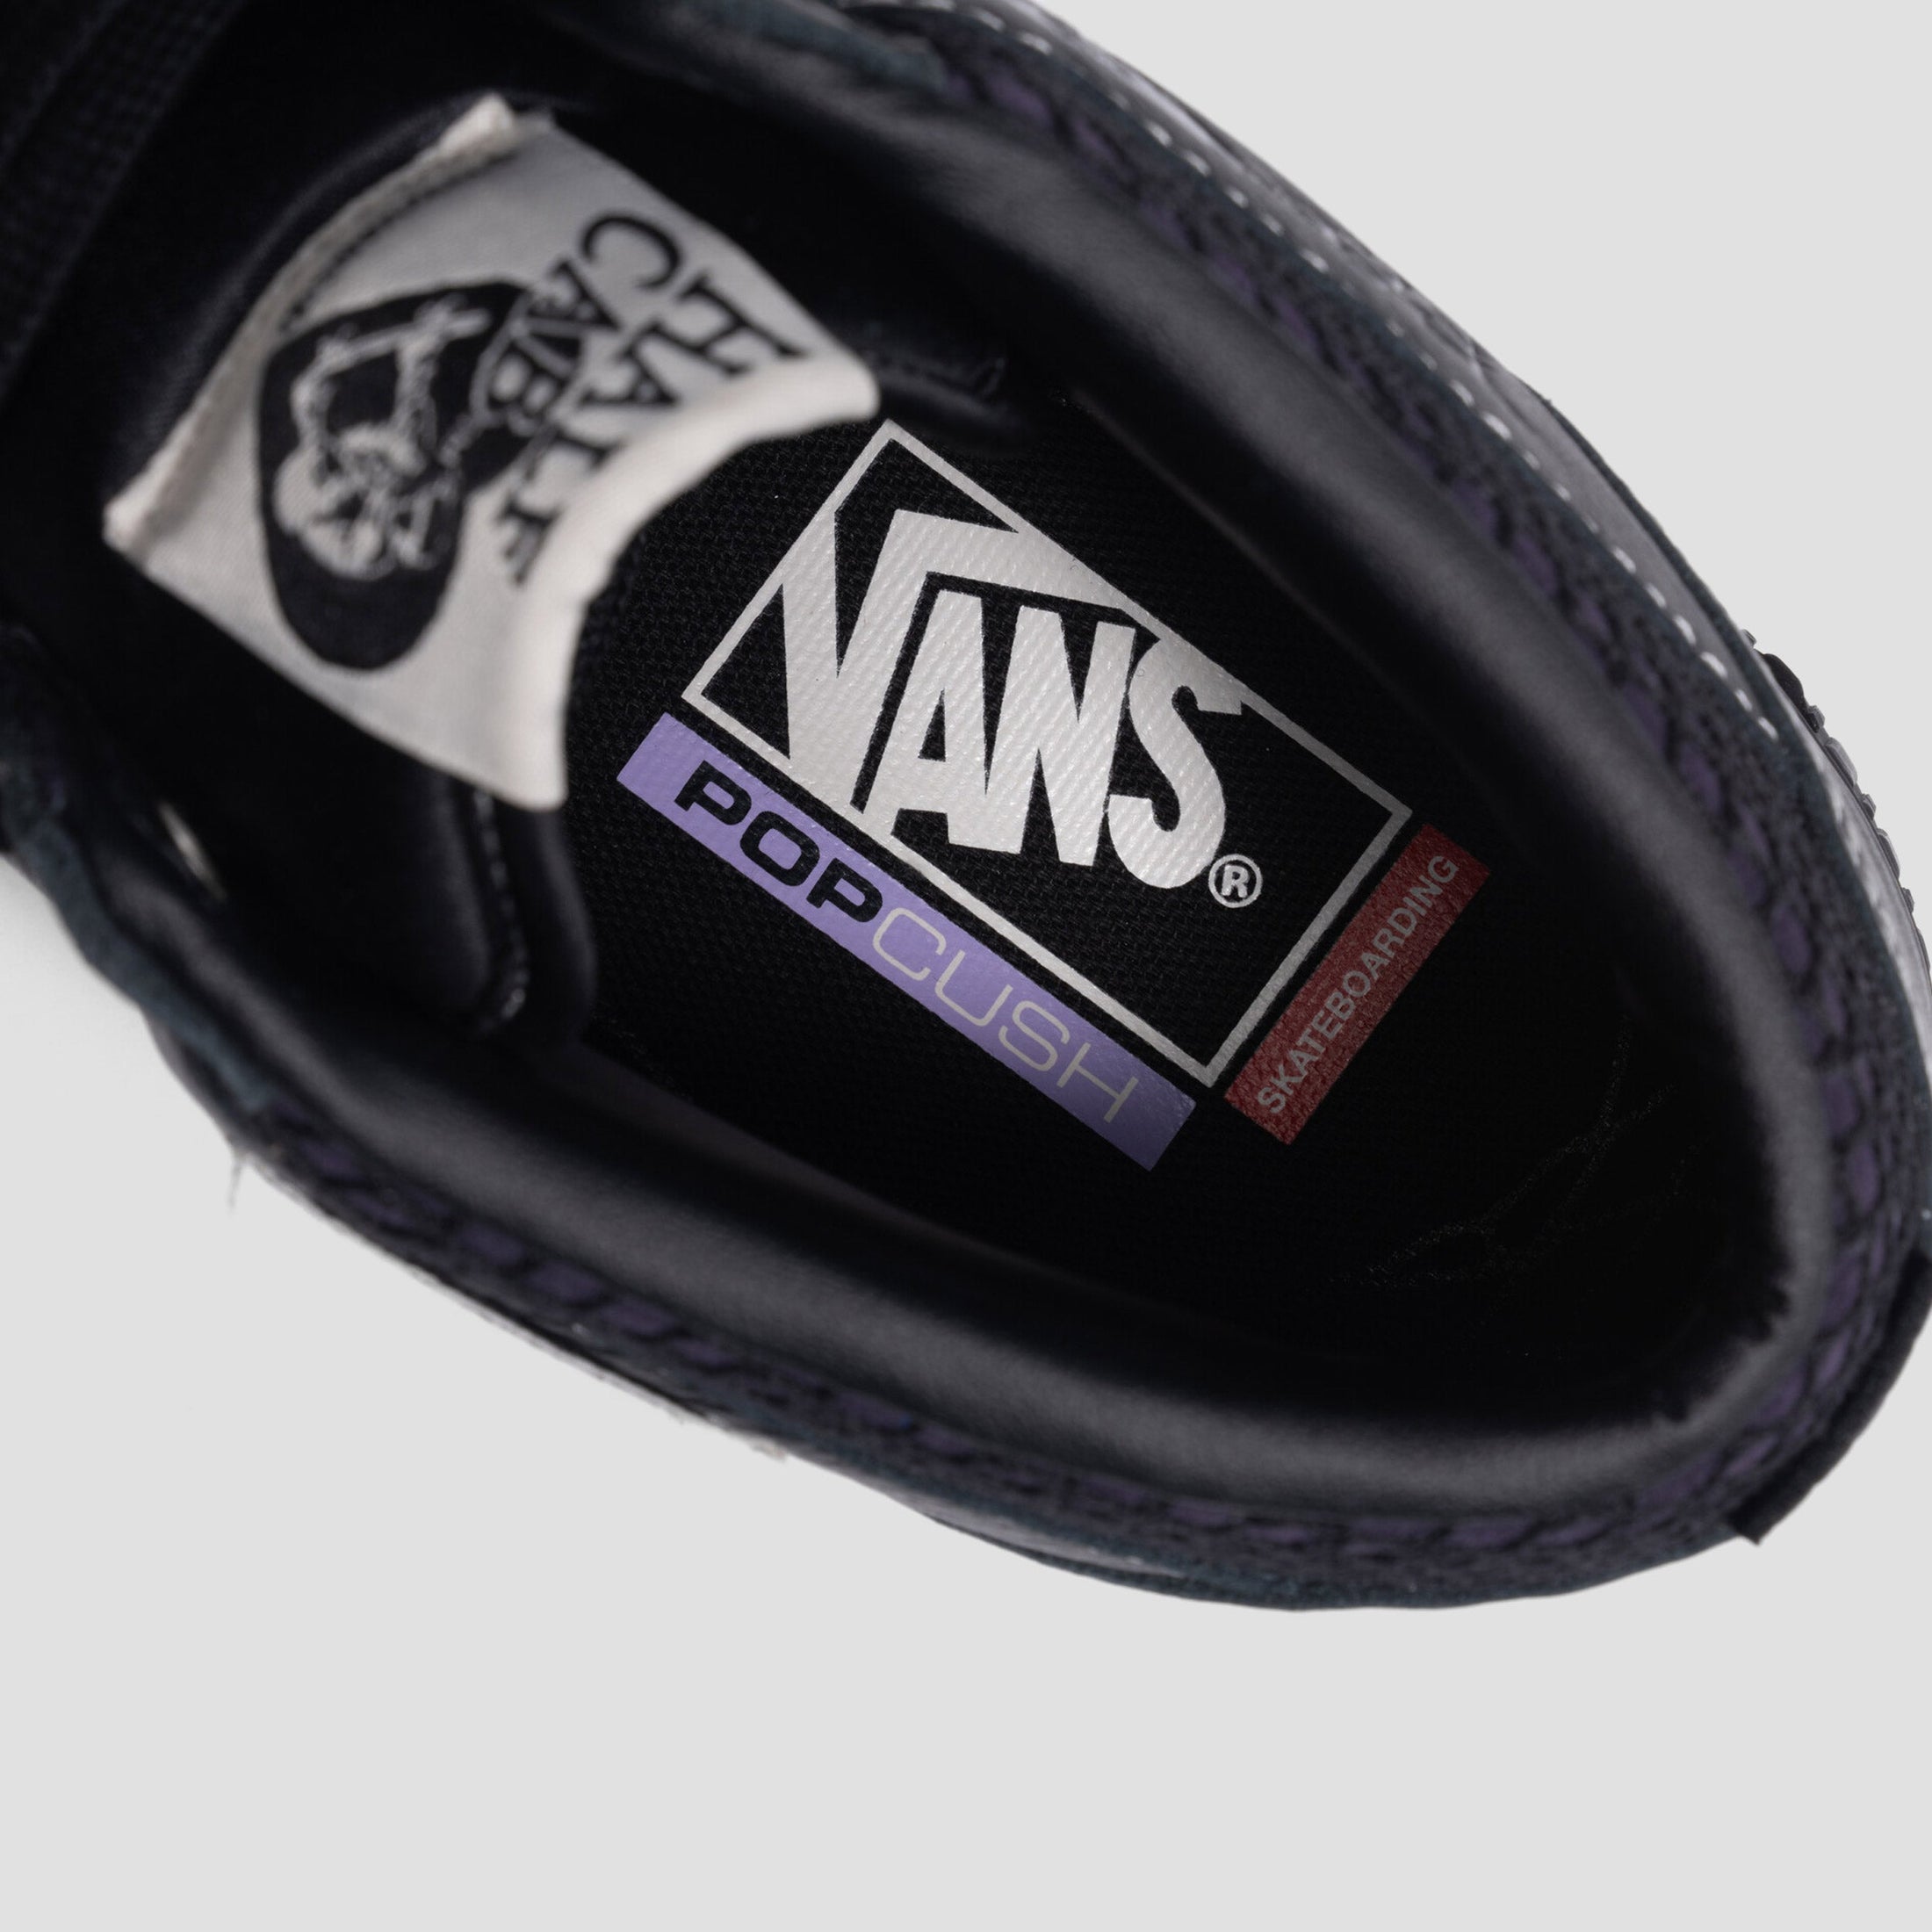 Vans X Passport Skate Half Cab Skate Shoes Black / Purple